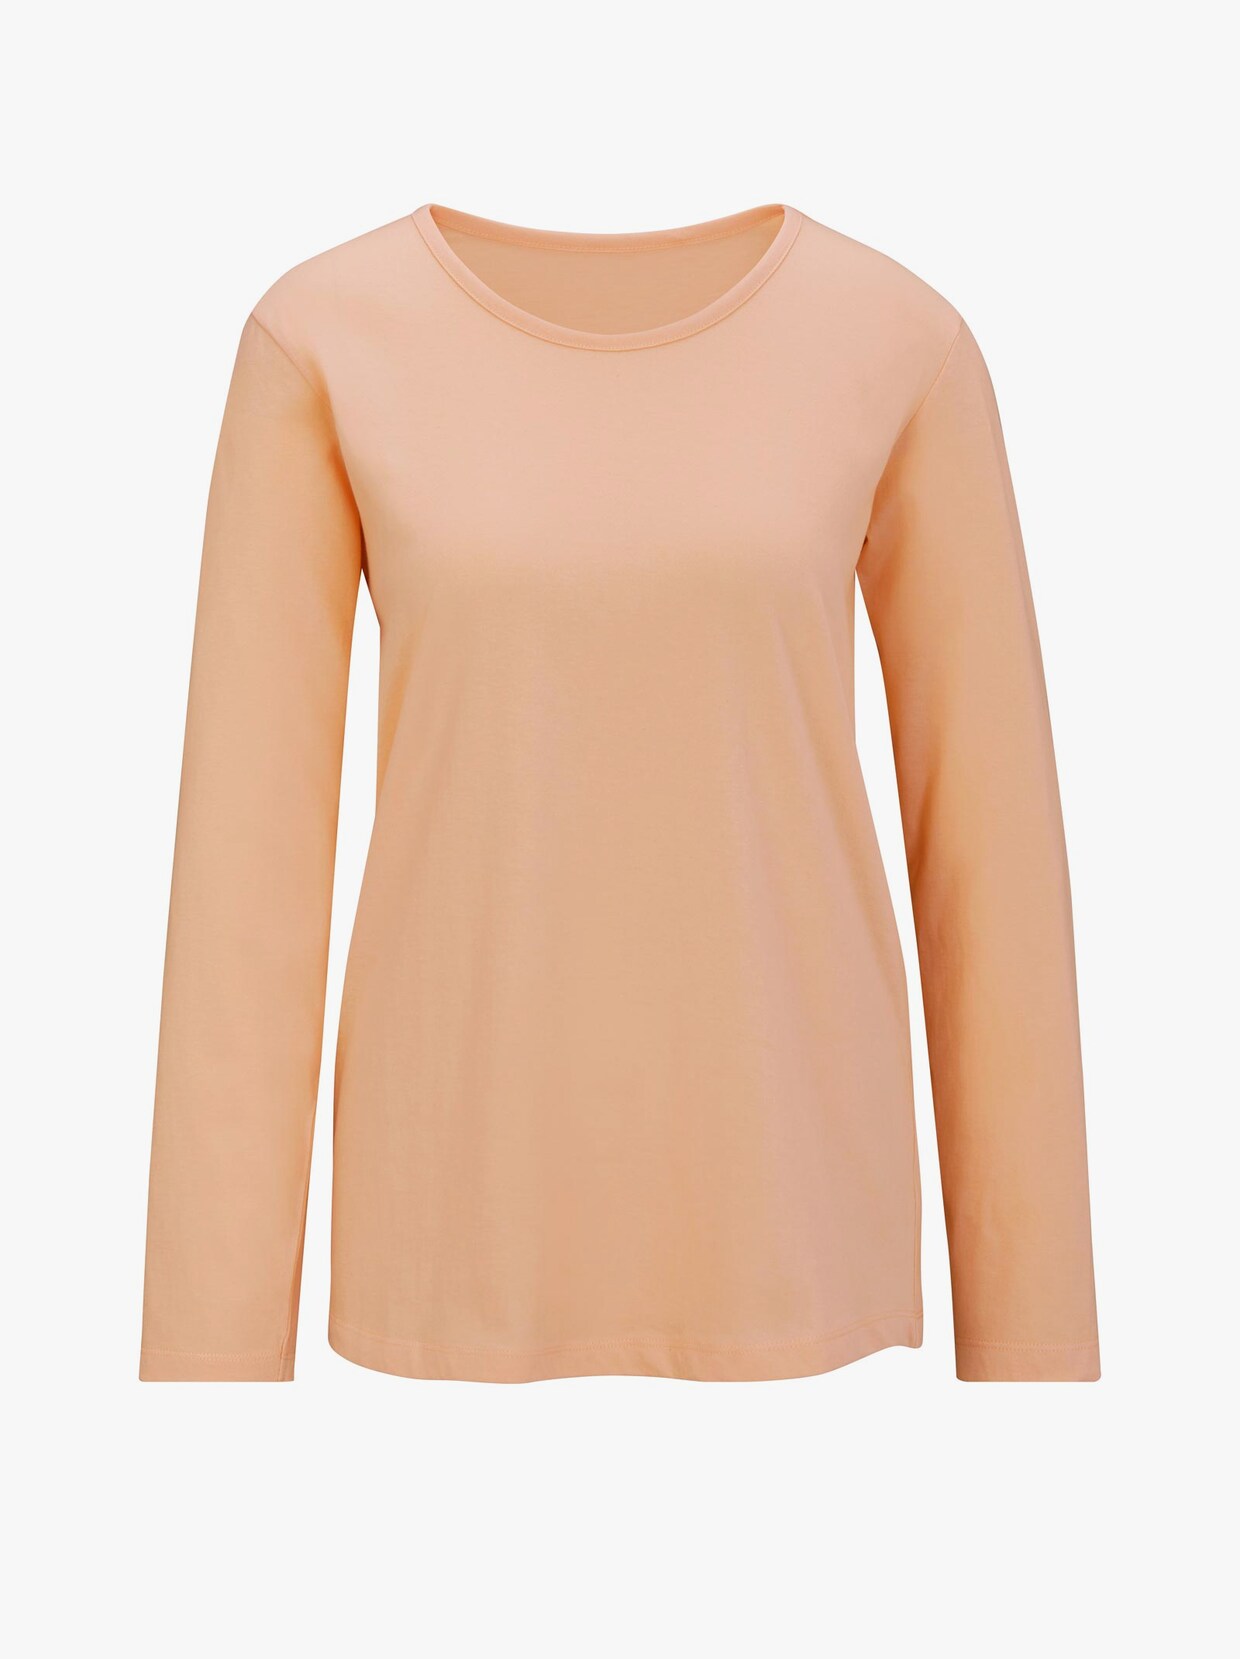 Schlafanzug-Shirt - apricot